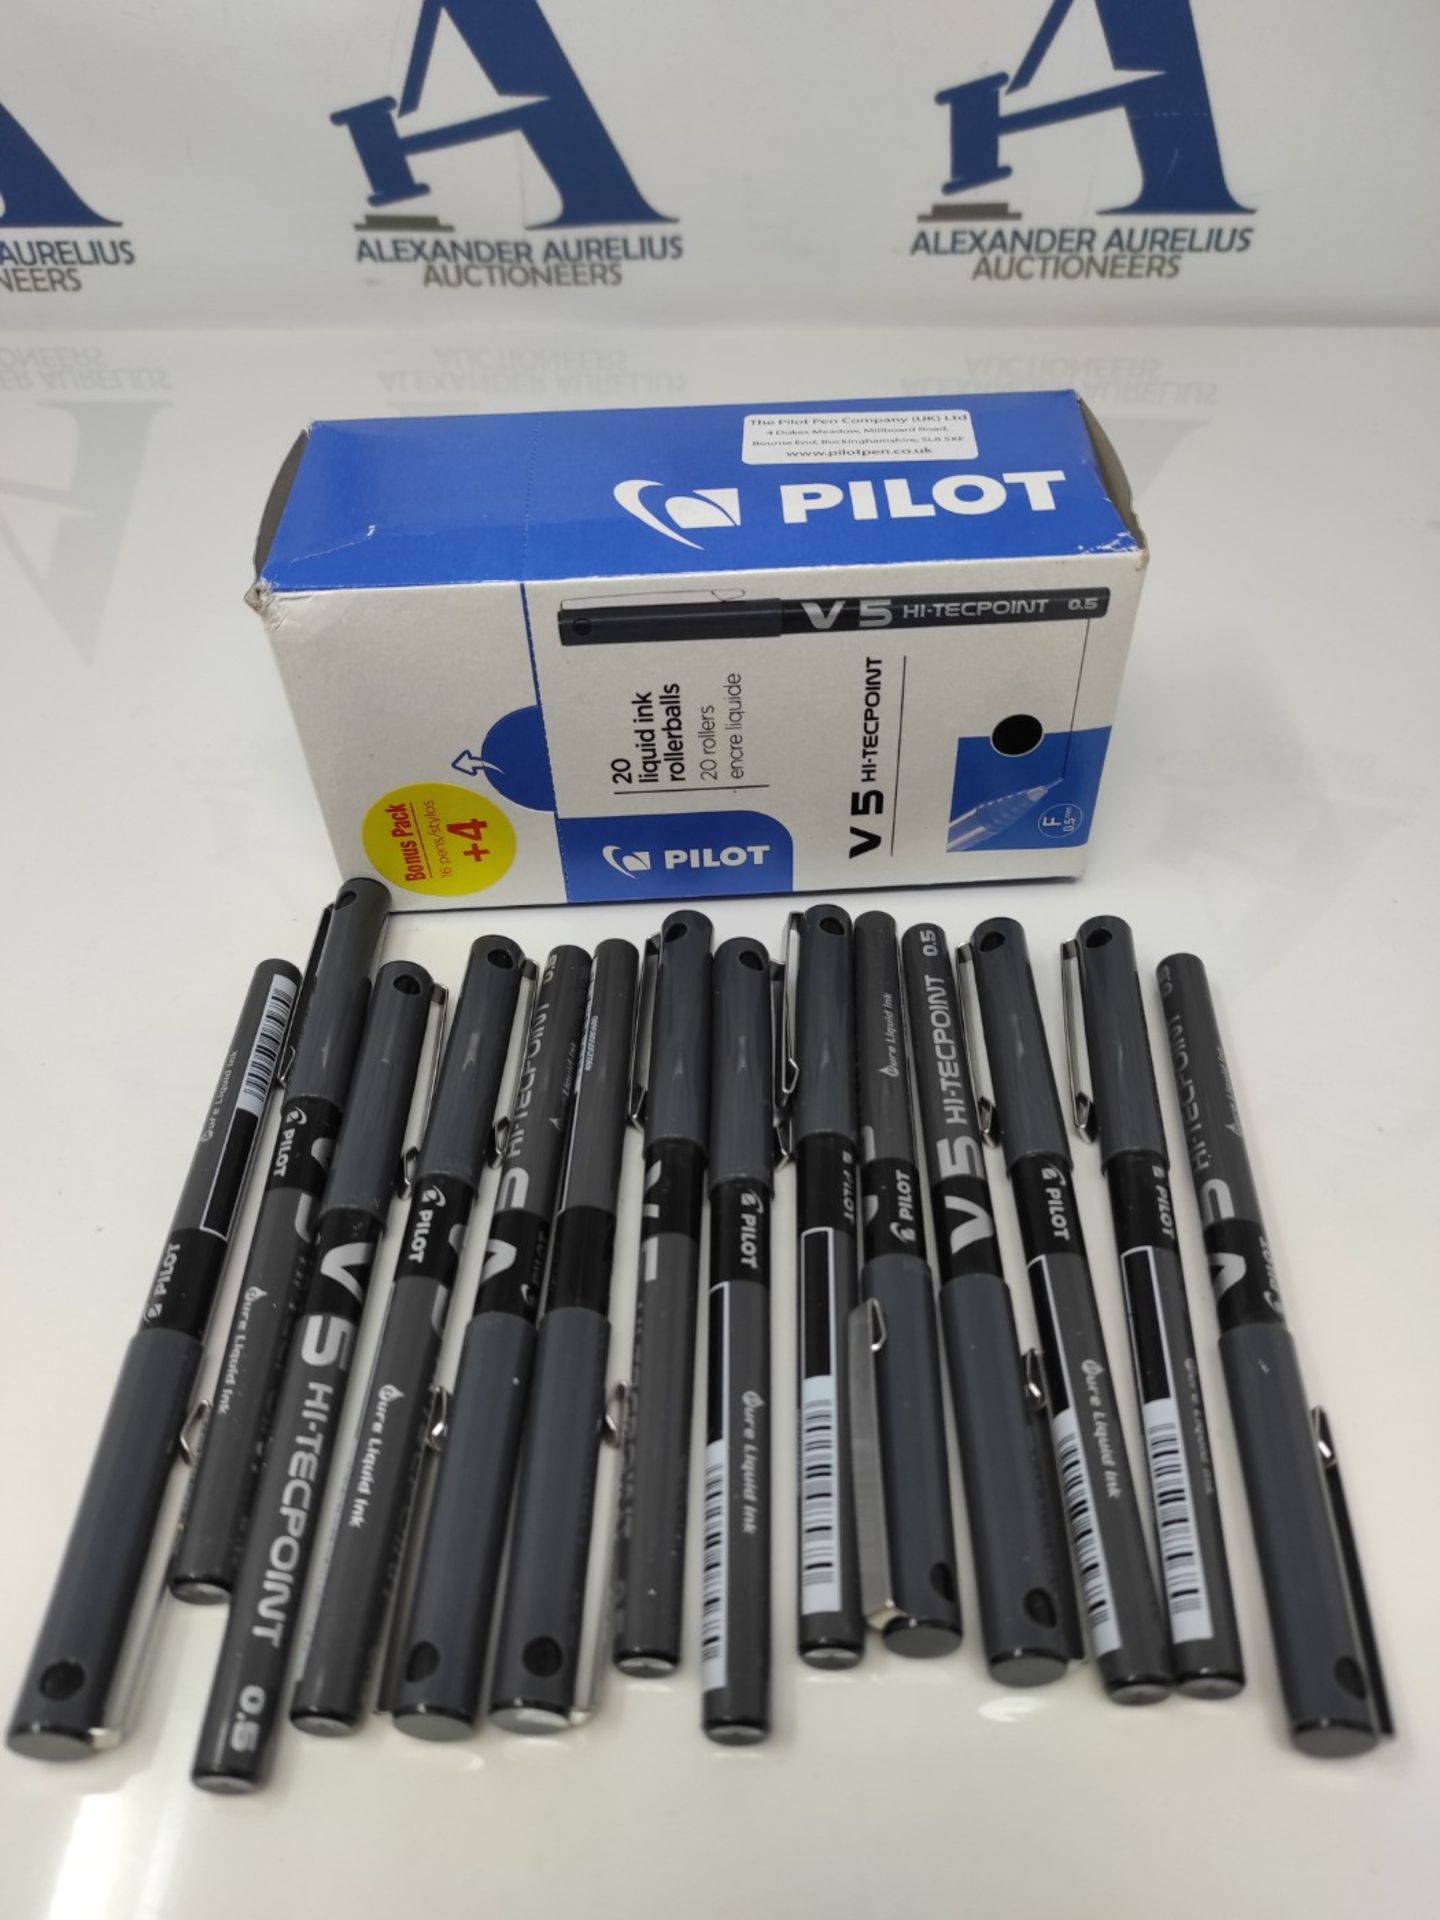 Pilot 3131910516507 V5 Hi-Tecpoint Liquid Ink Roller Pen - Black (Pack of 20) - Image 2 of 2